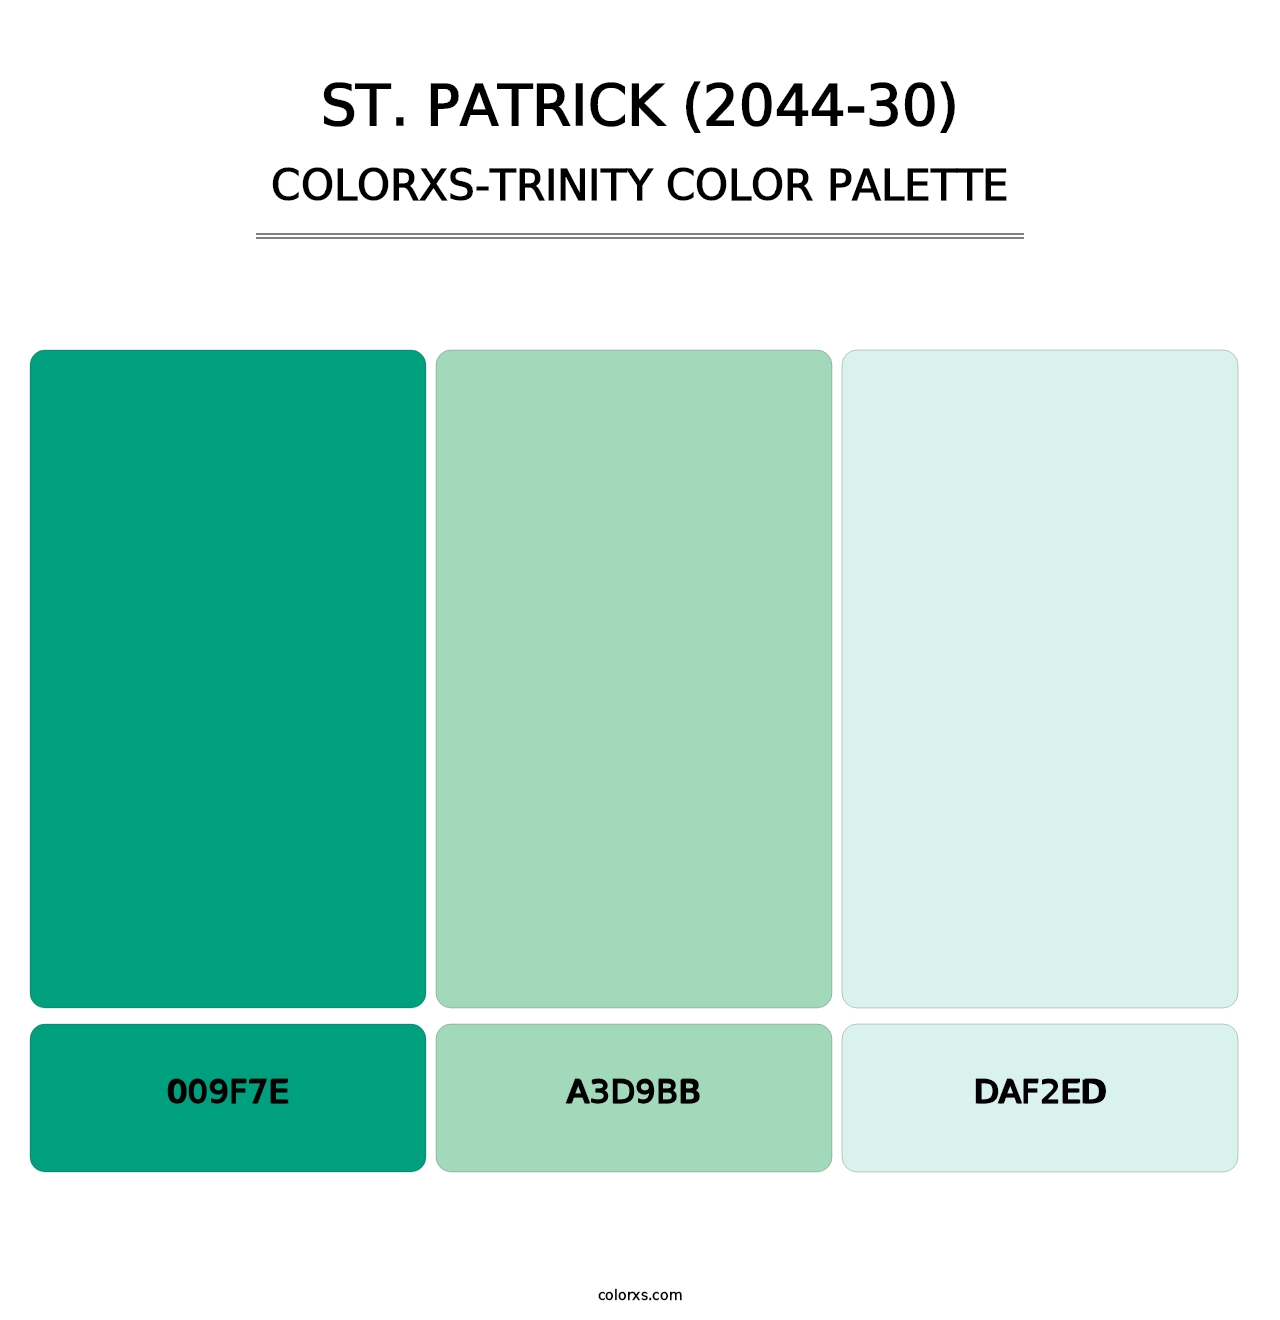 St. Patrick (2044-30) - Colorxs Trinity Palette